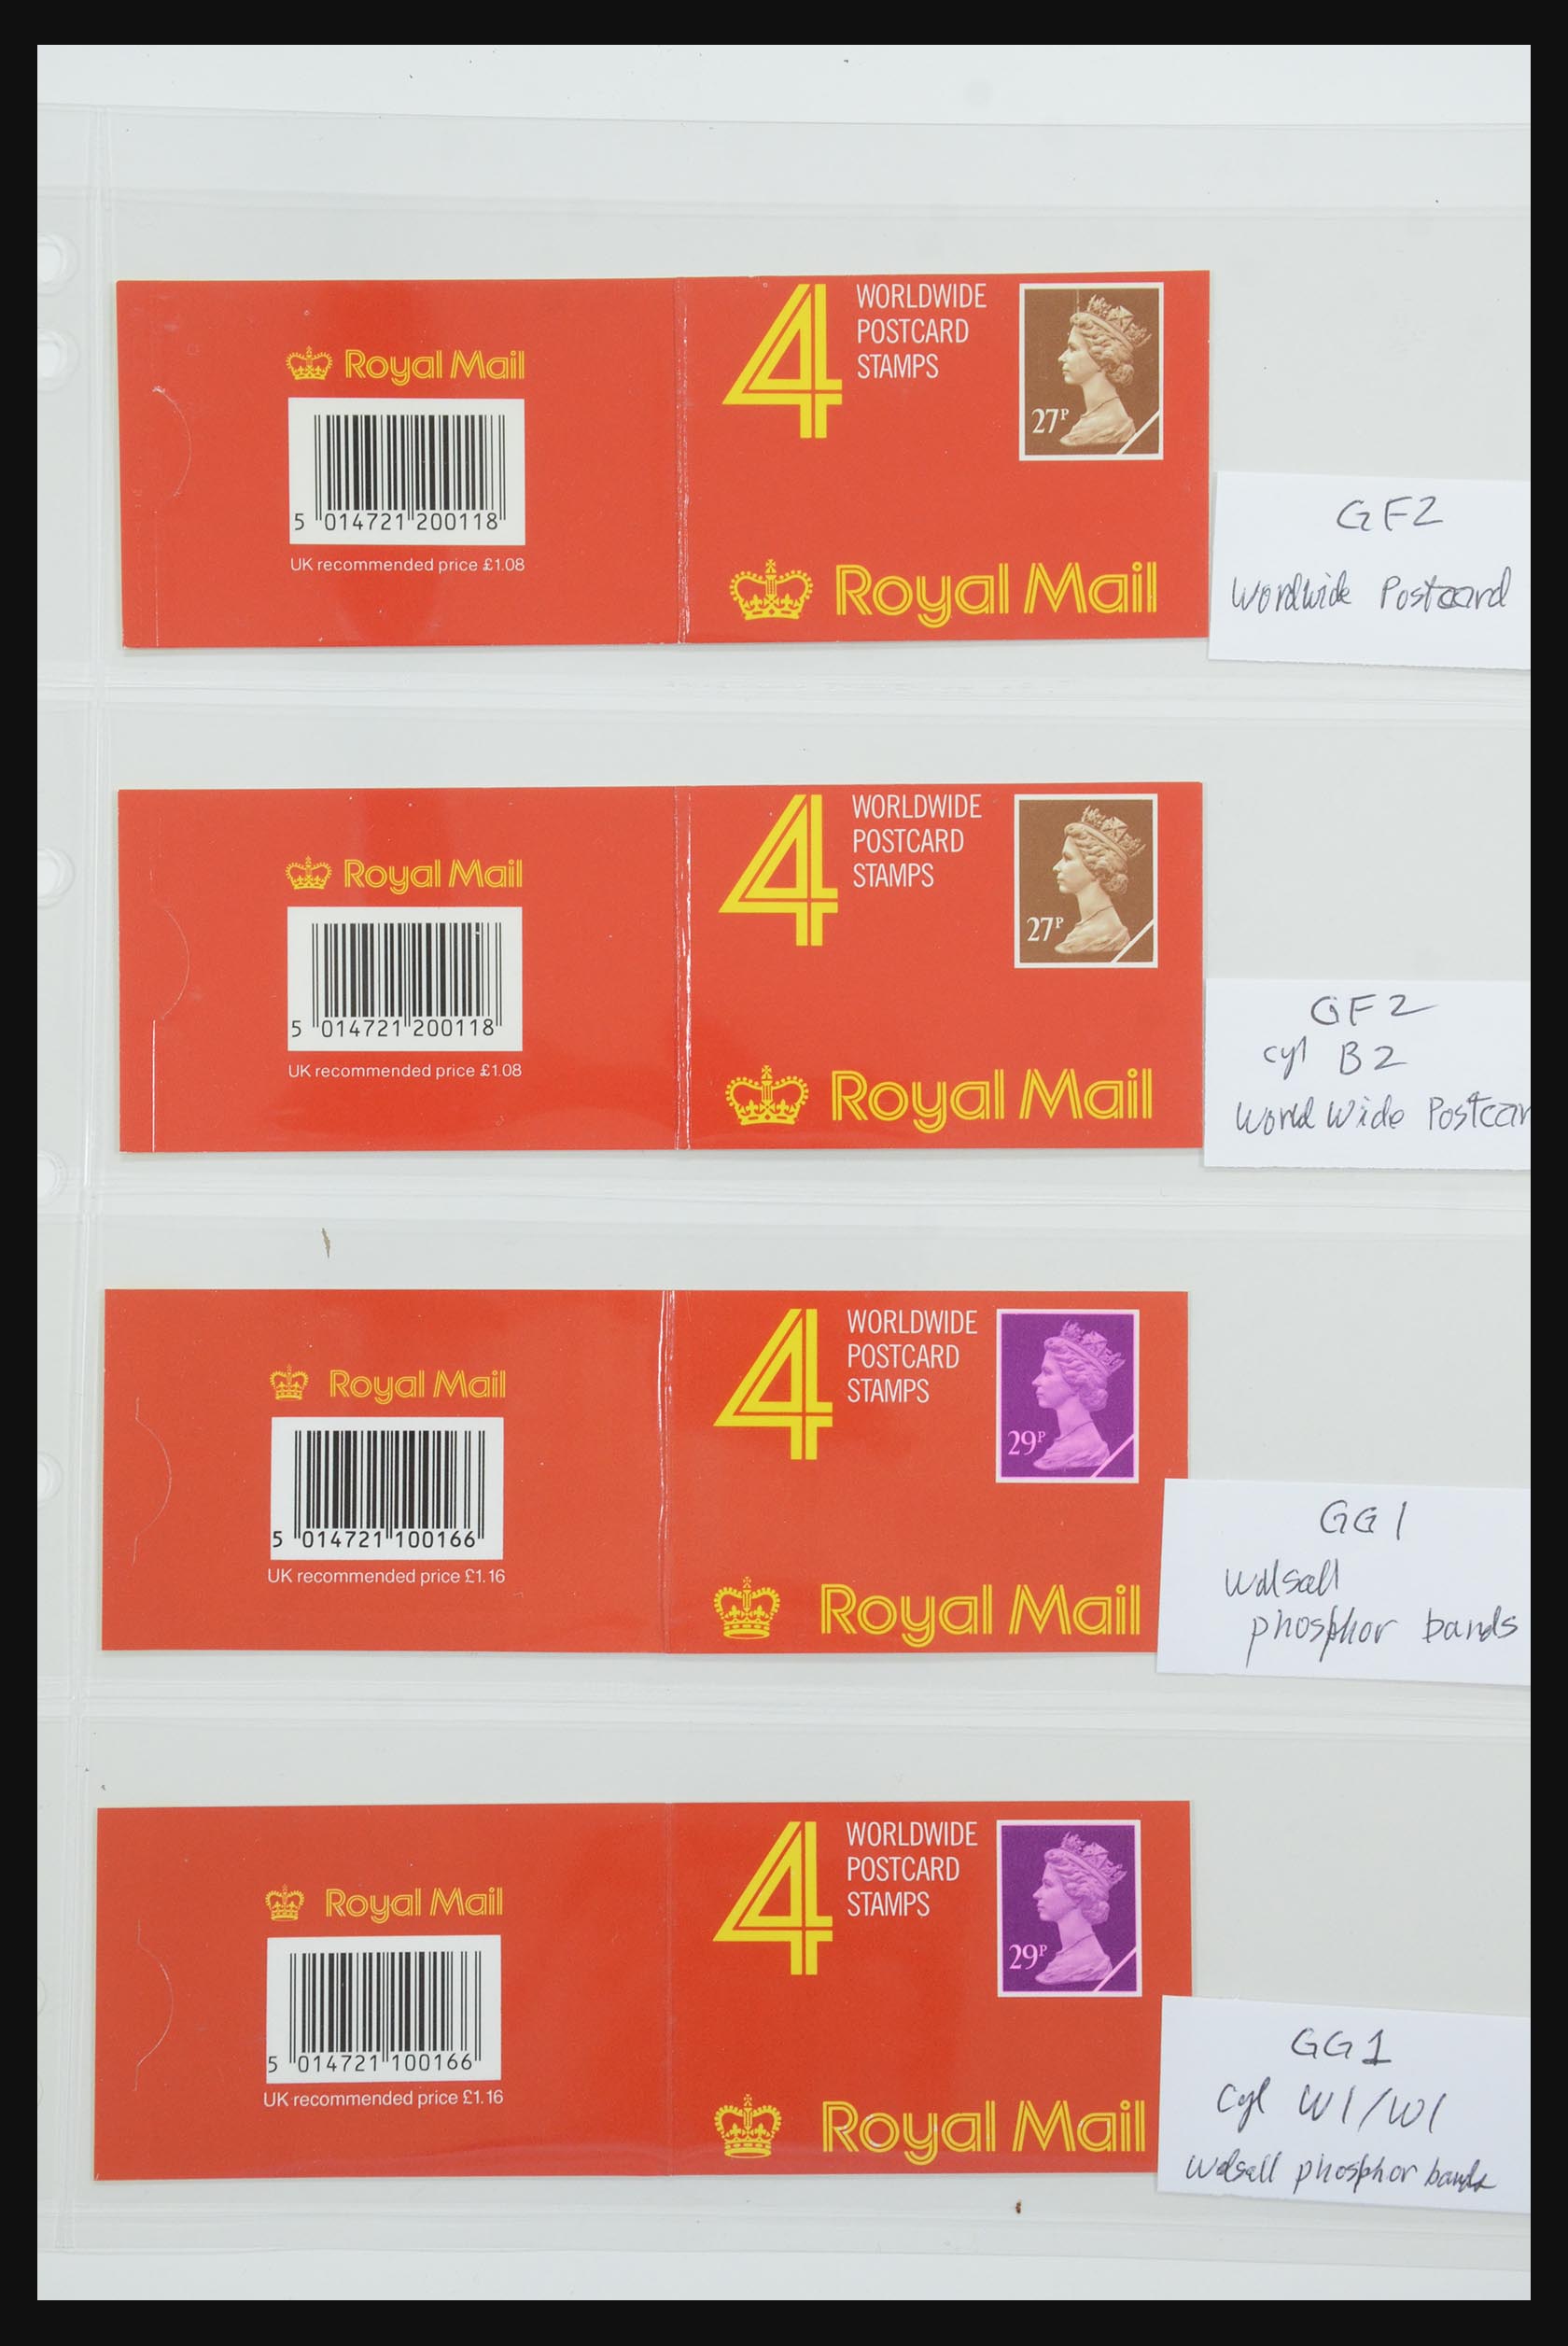 31959 029 - 31959 Great Britain stampbooklets 1987-2016!!